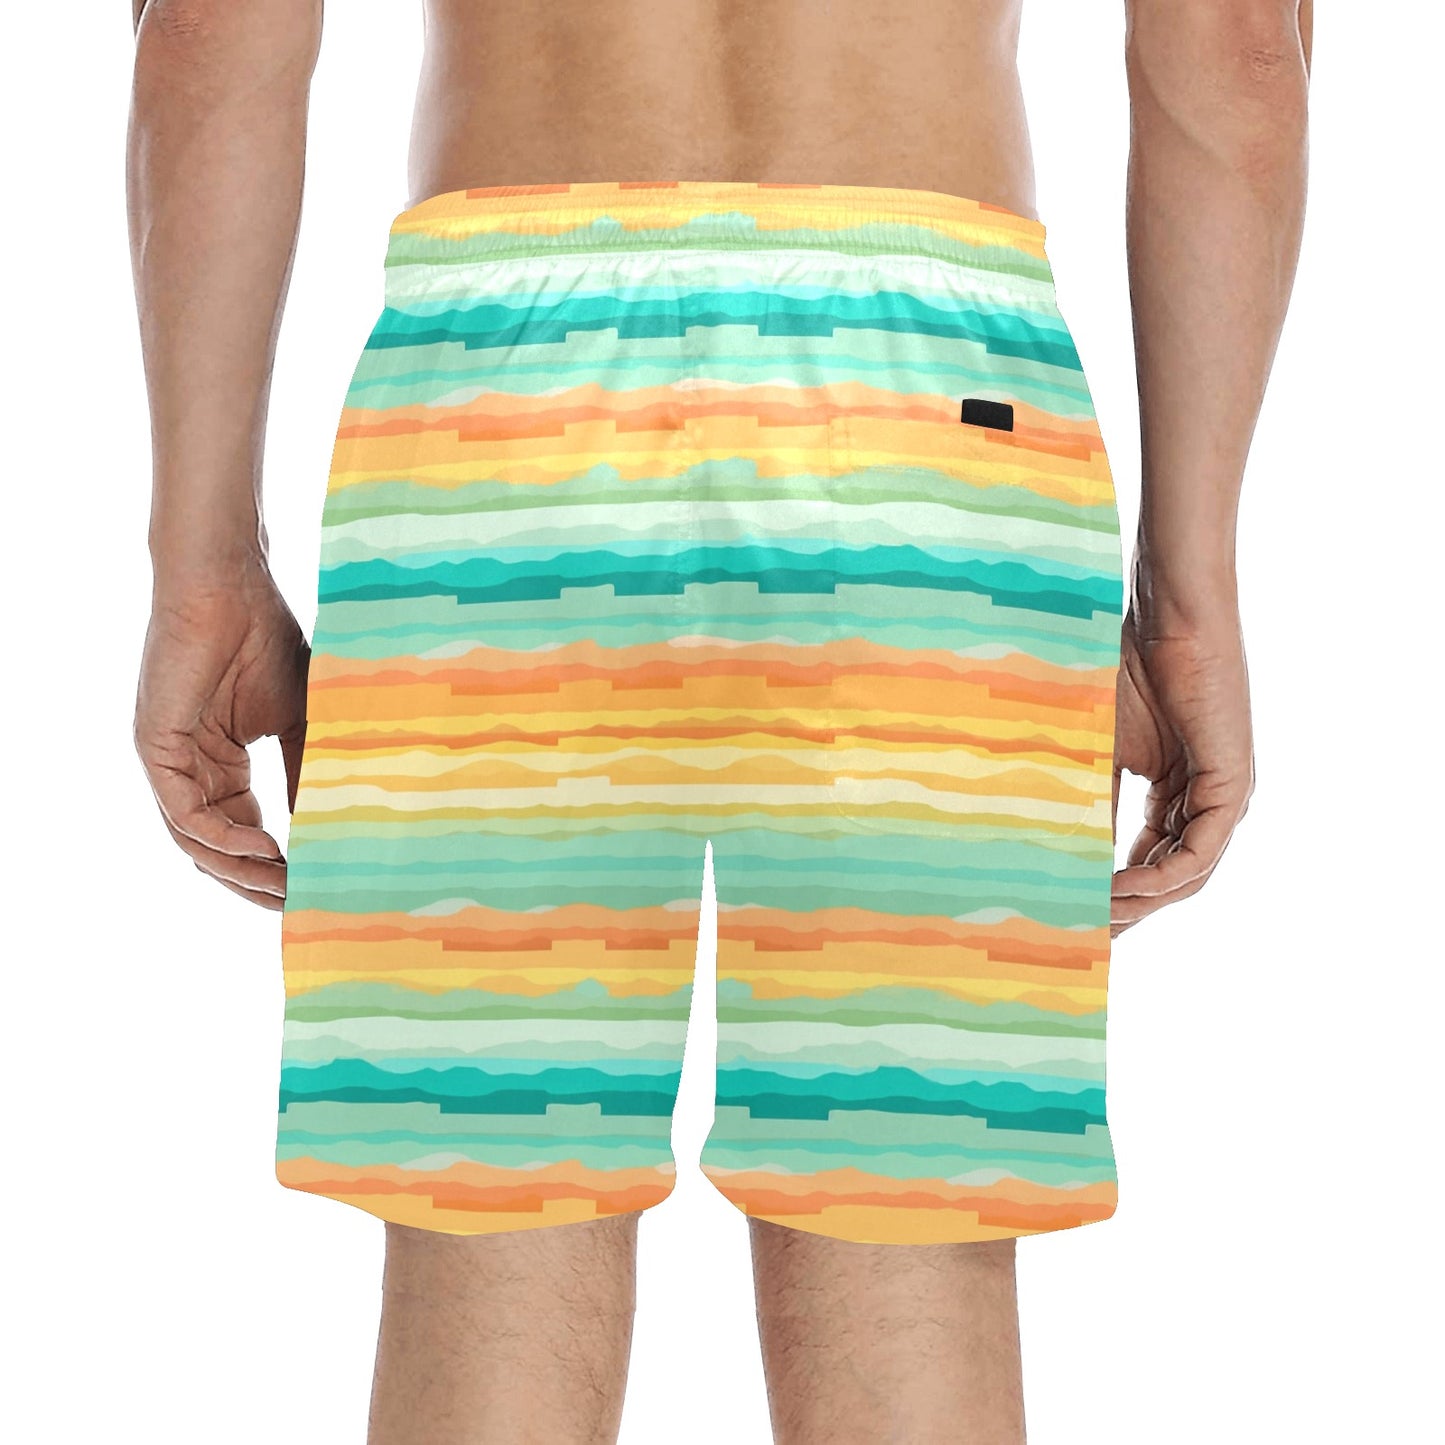 Striped Men Swim Trunks, Green Yellow Mid Length Shorts Beach Pockets Mesh Lining Drawstring Boys Casual Bathing Suit Plus Size Swimwear